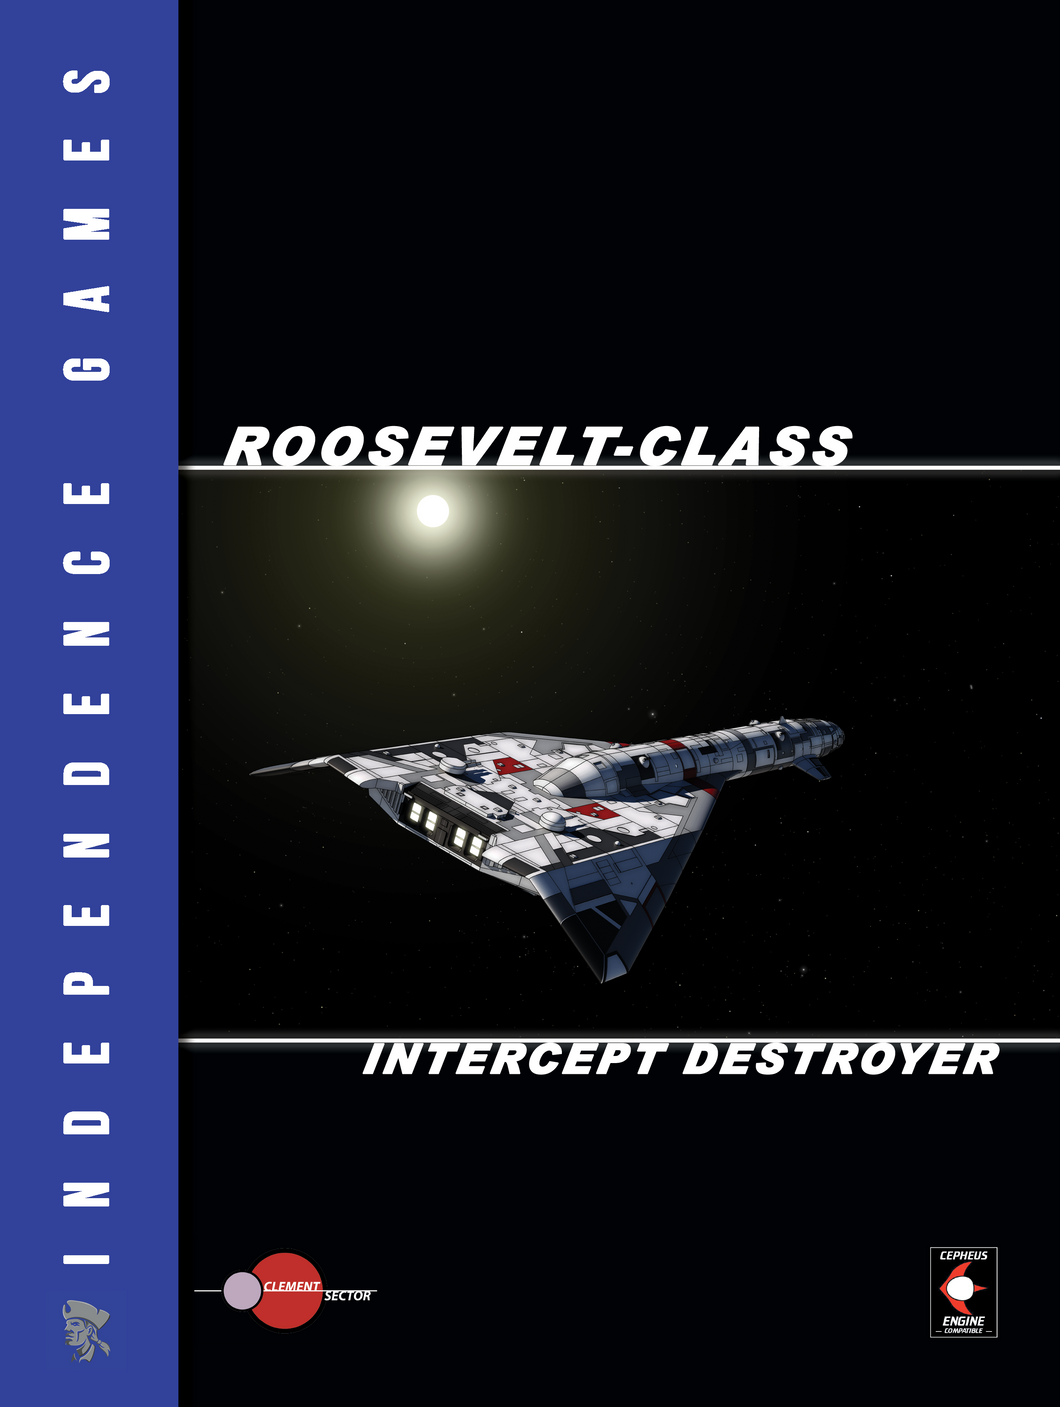 Roosevelt-class Intercept Destroyer PDF